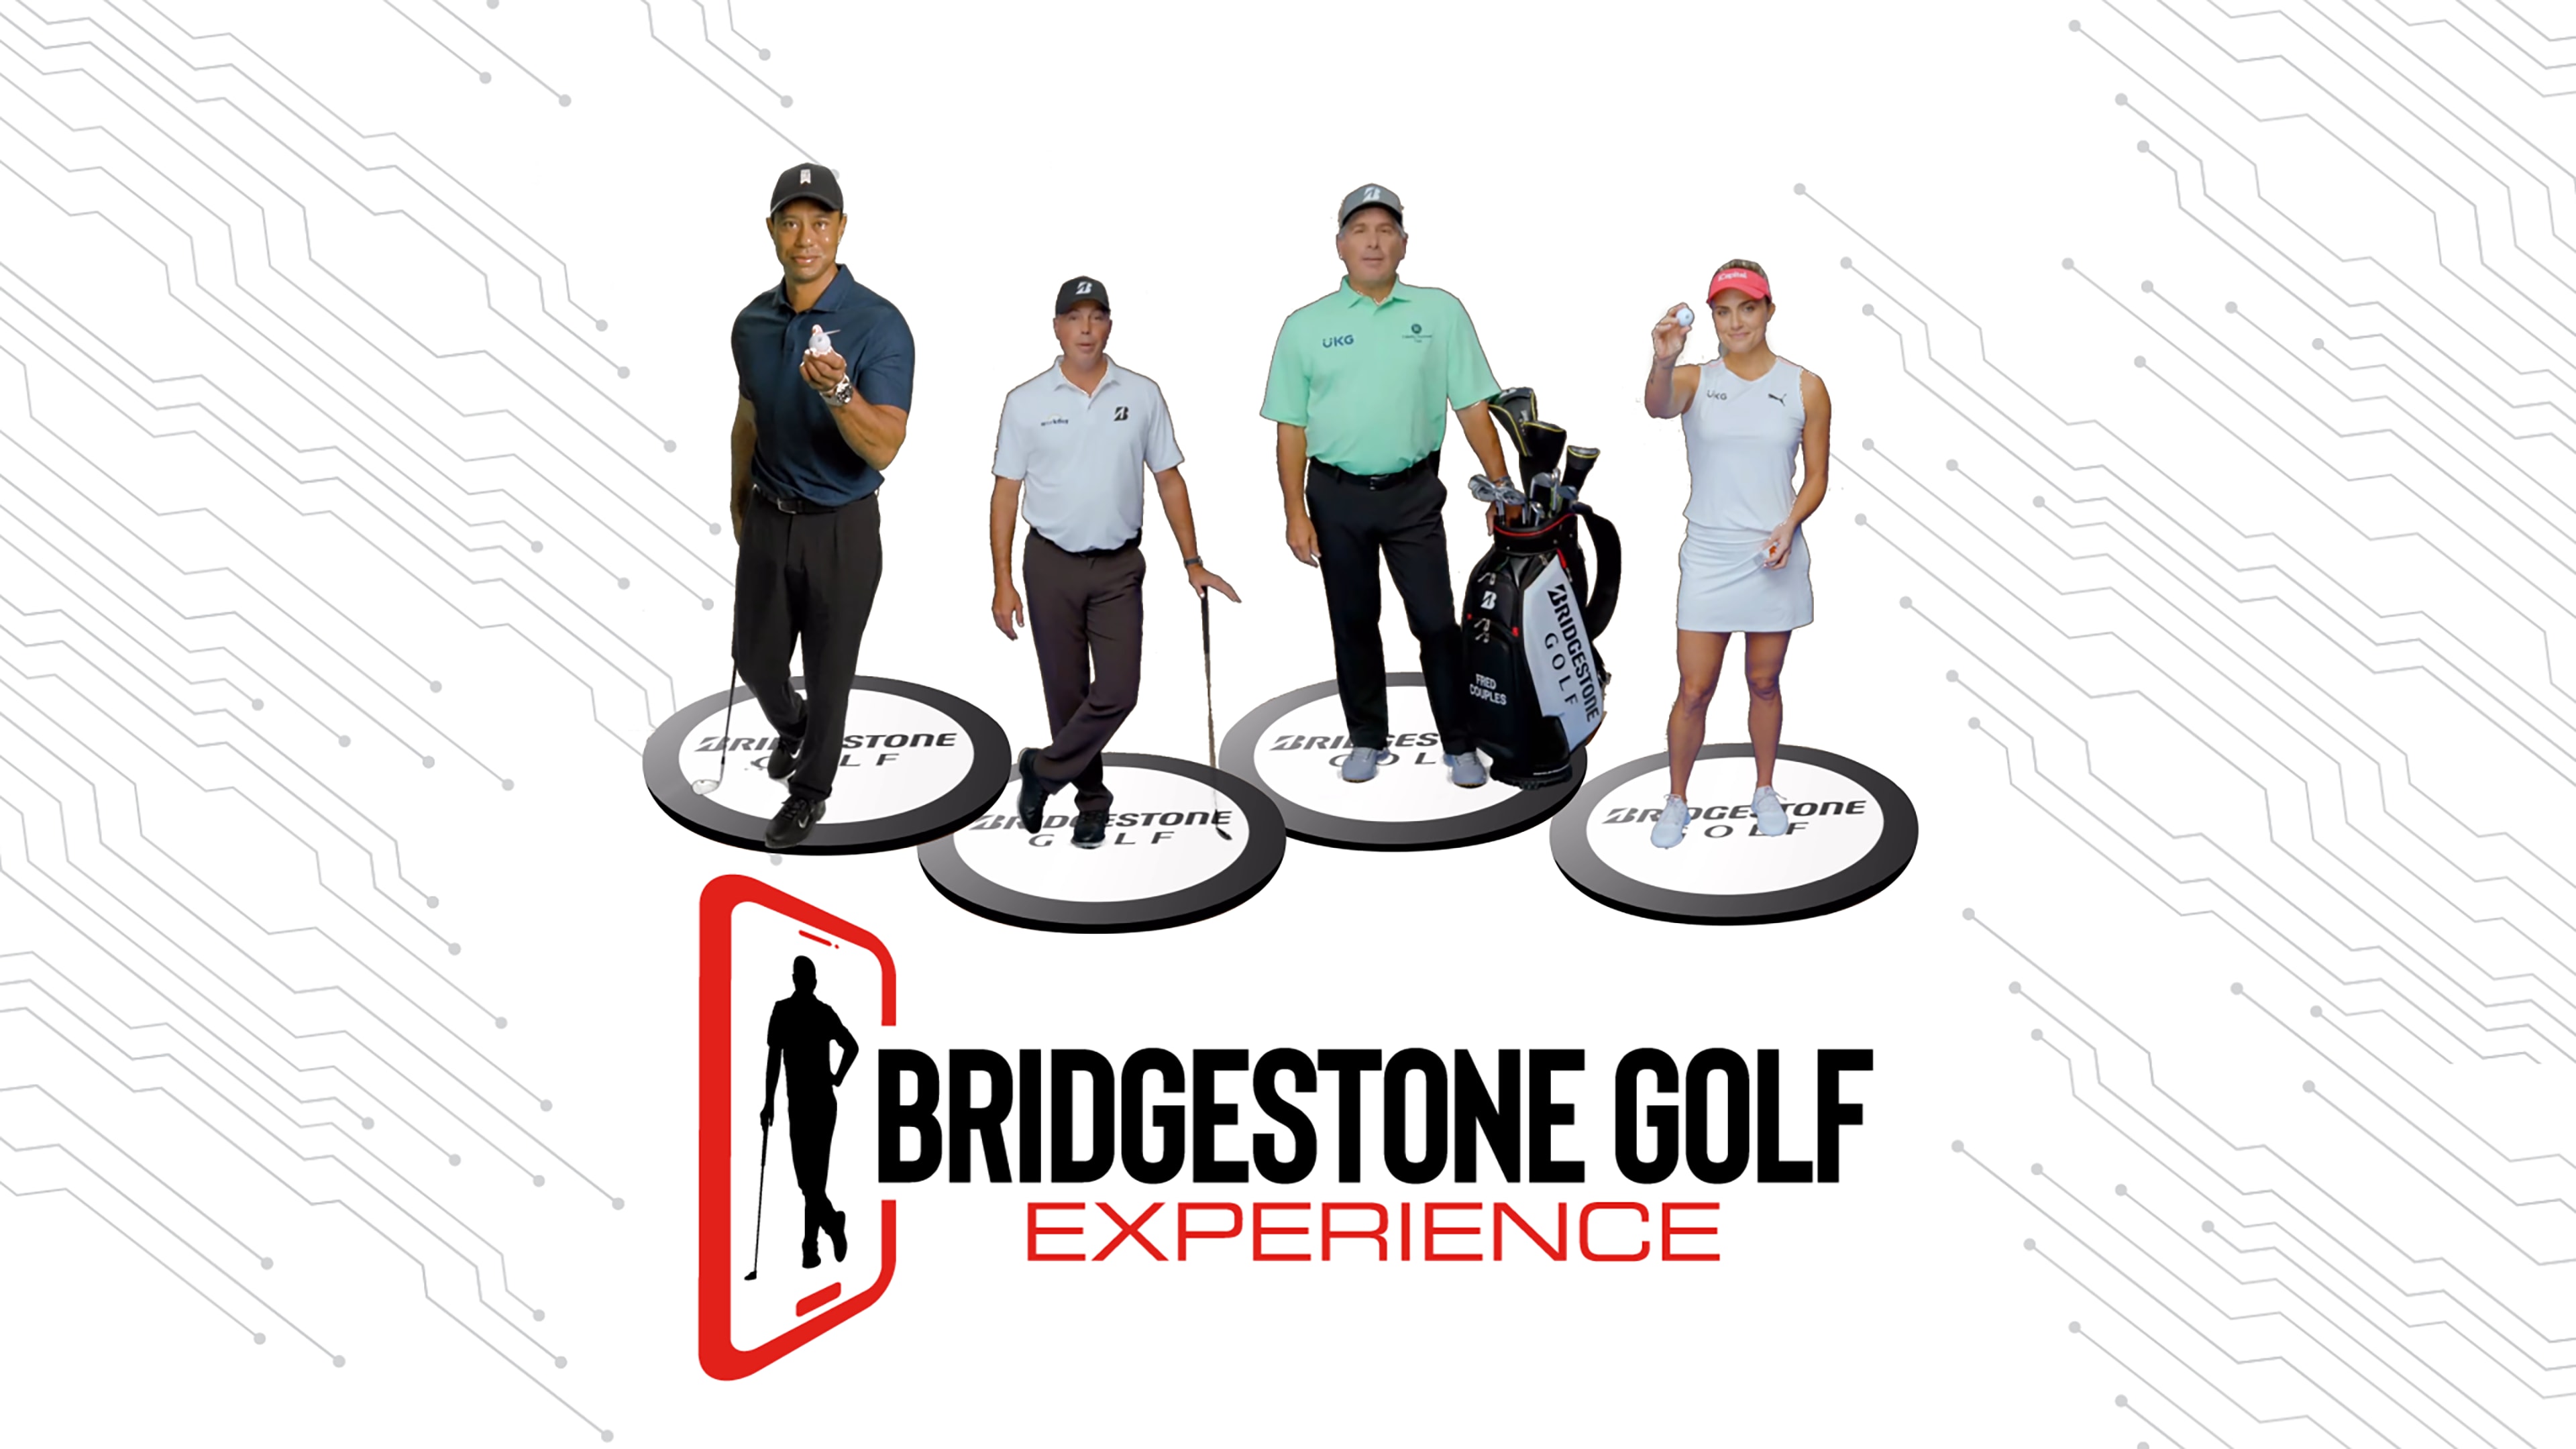 Bridgestone Golf Tour Team Imagery